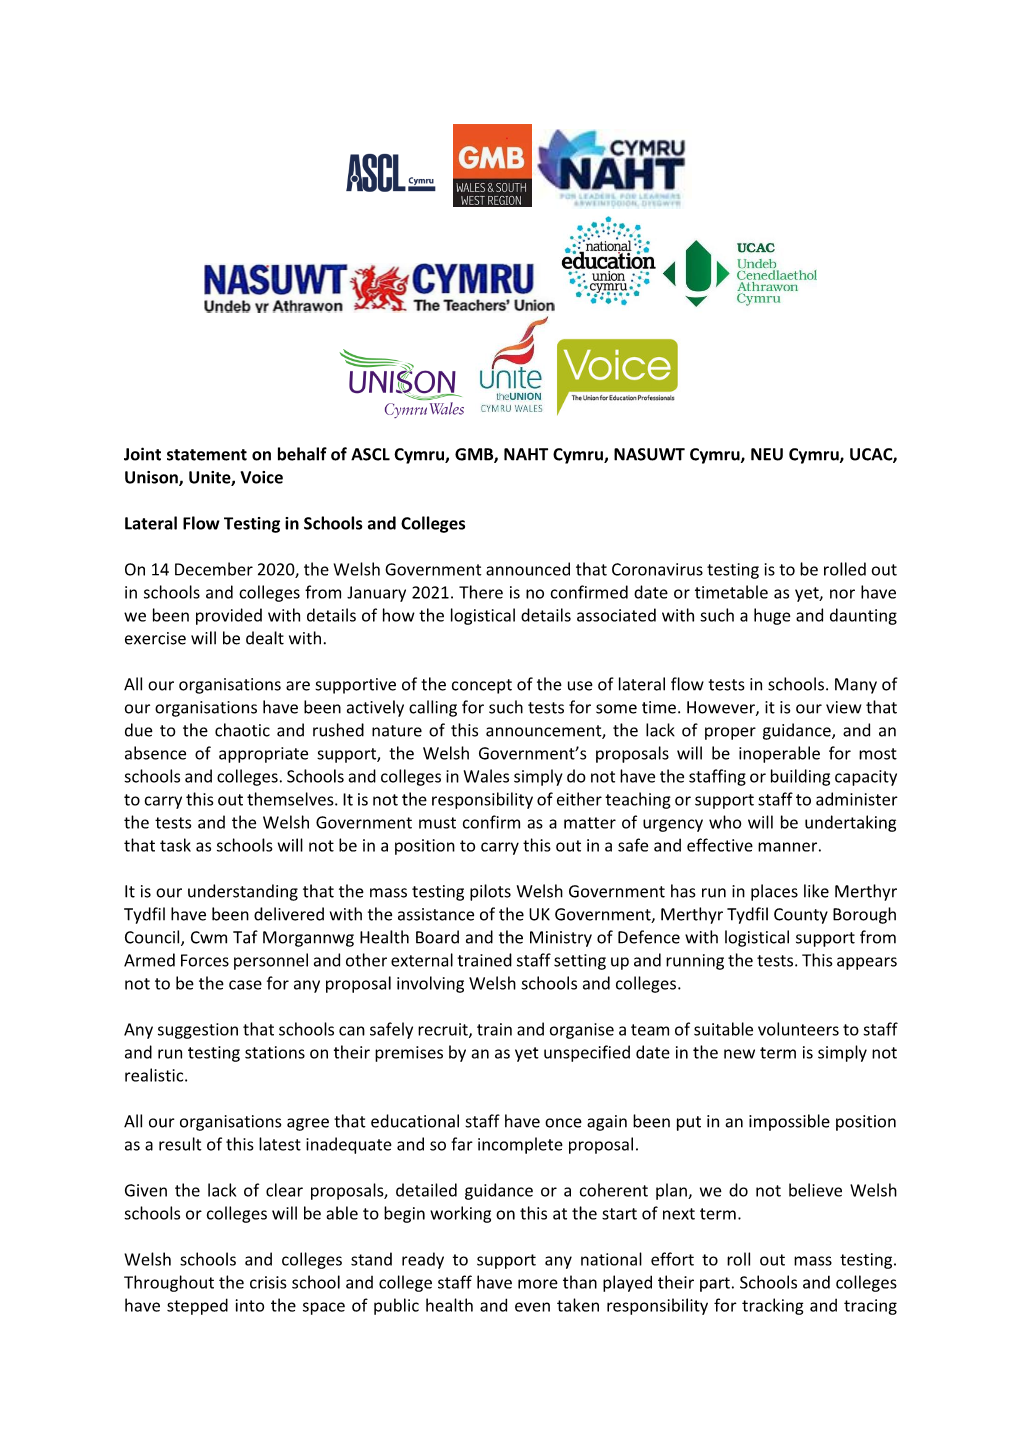 Joint Statement on Behalf of ASCL Cymru, GMB, NAHT Cymru, NASUWT Cymru, NEU Cymru, UCAC, Unison, Unite, Voice